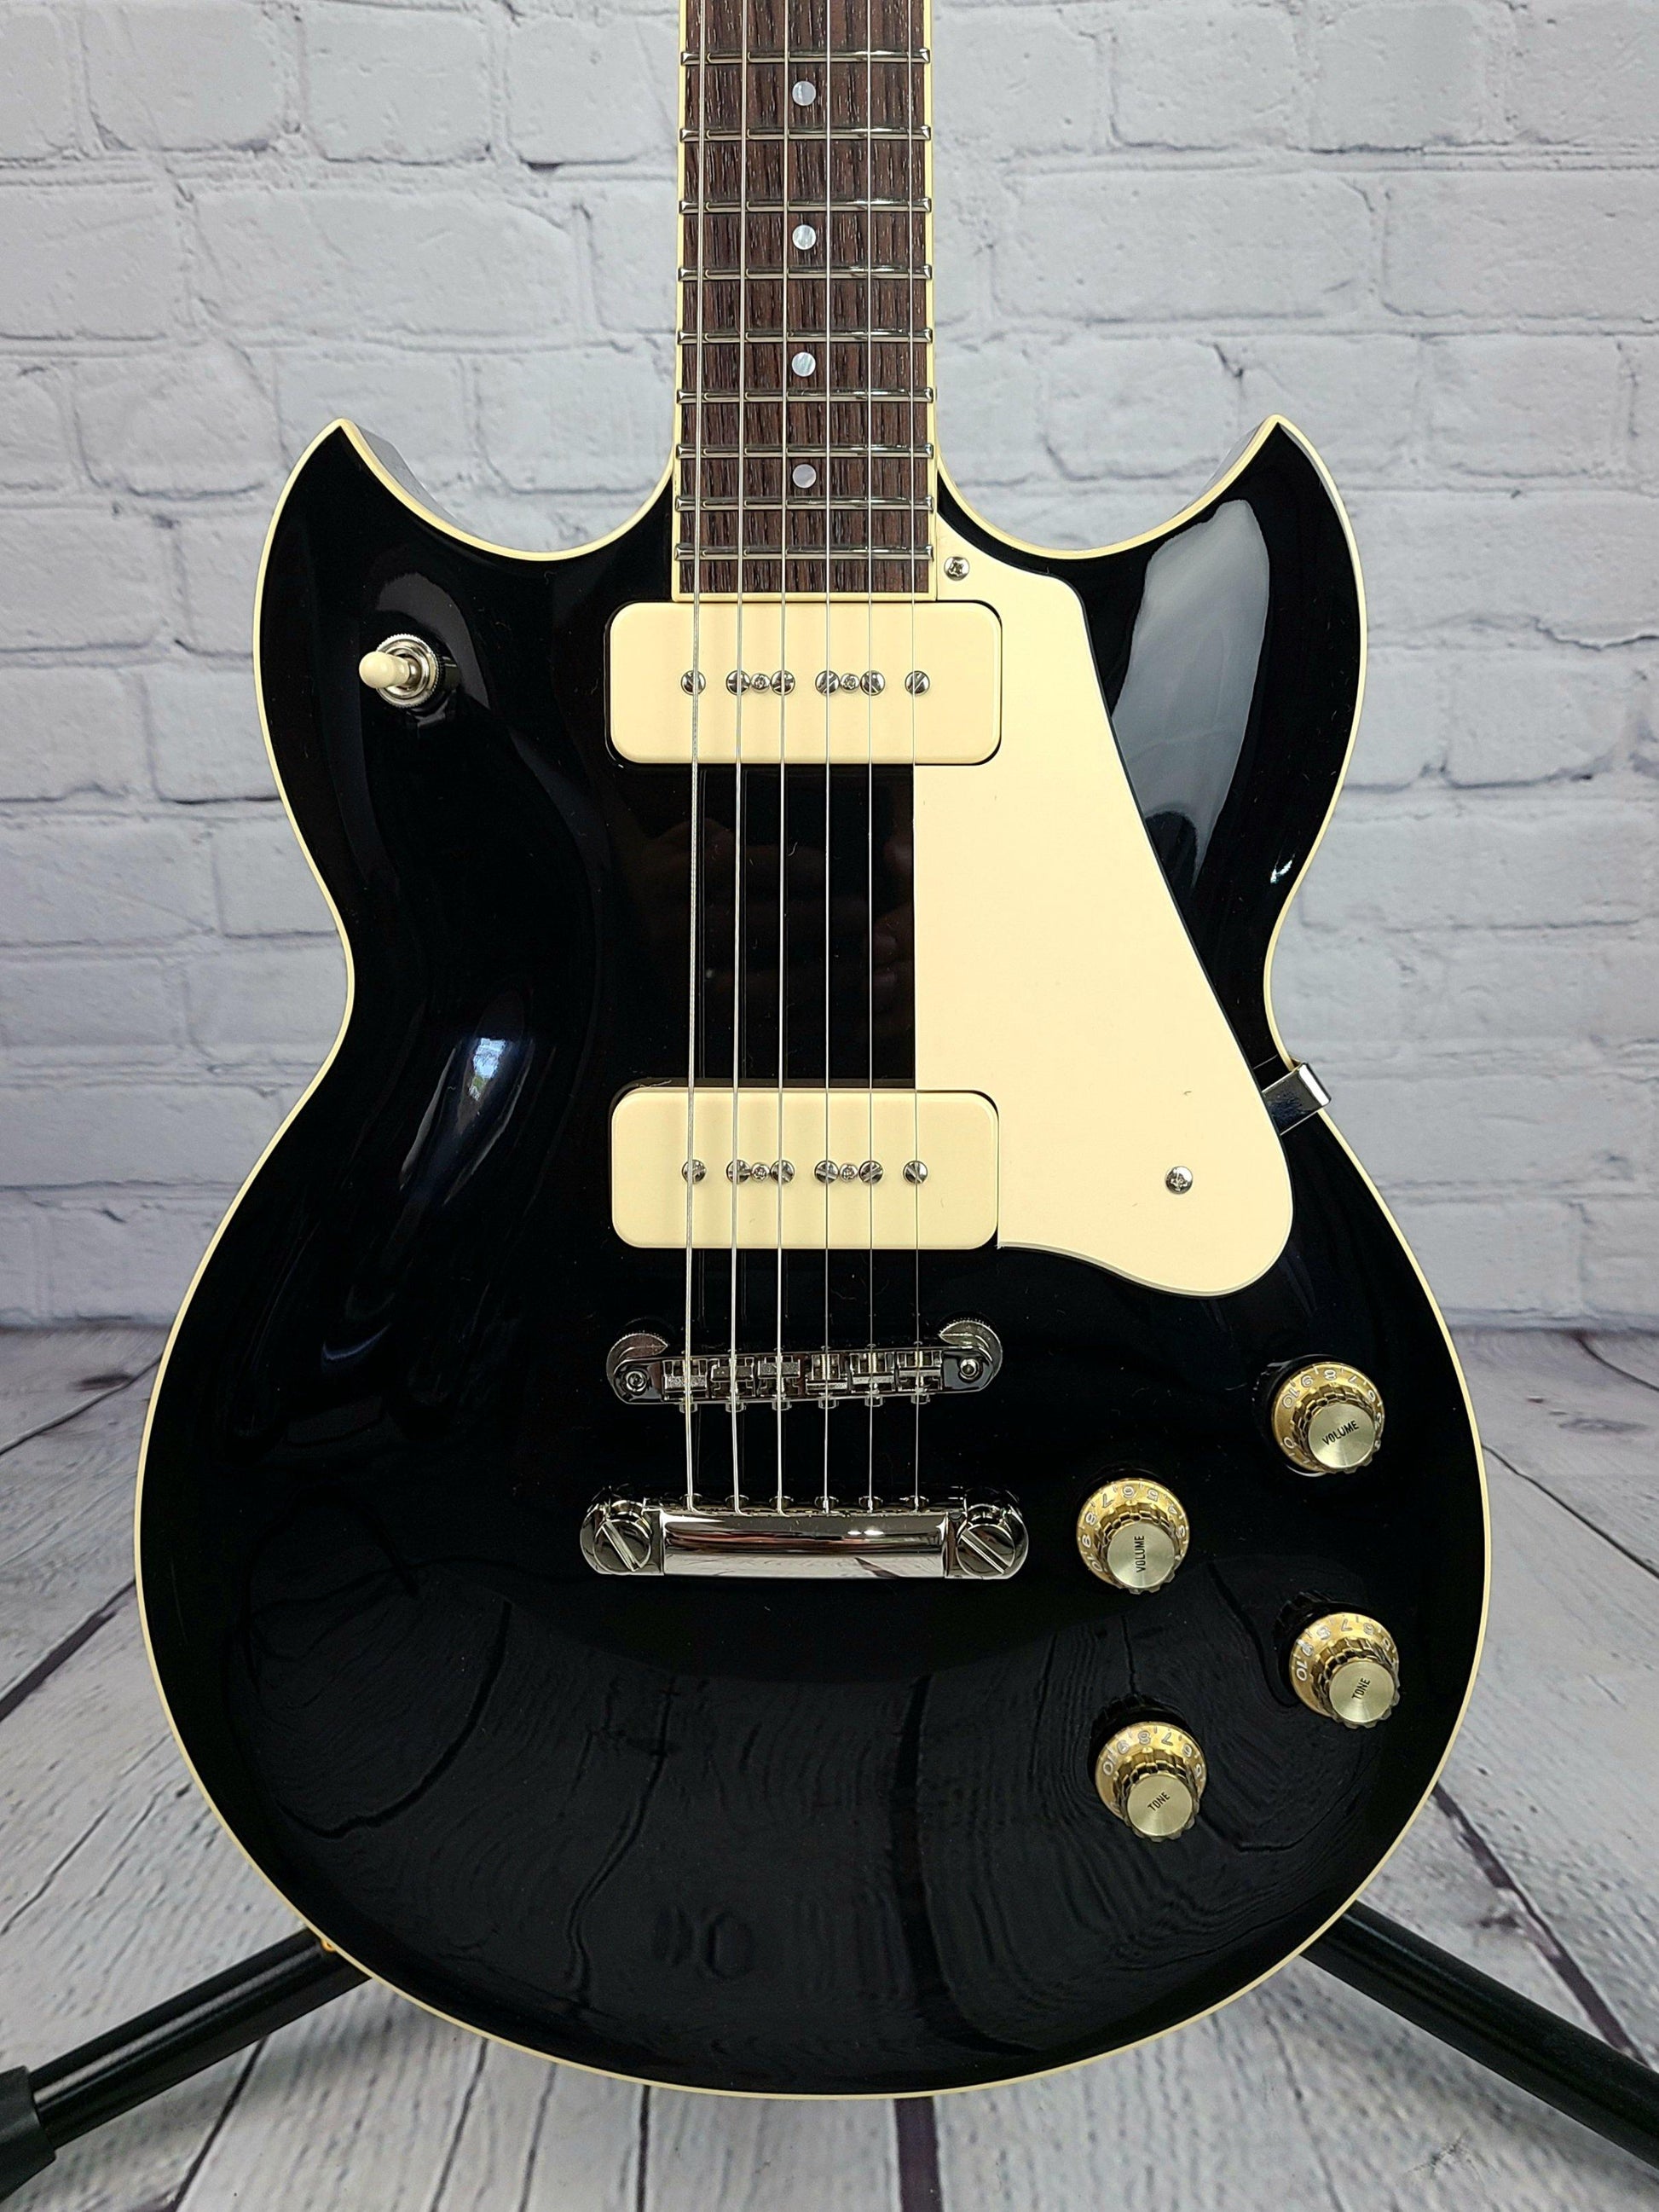 Yamaha SG1802 Electric Guitar Gloss Black P90 Made in Japan - Guitar Brando